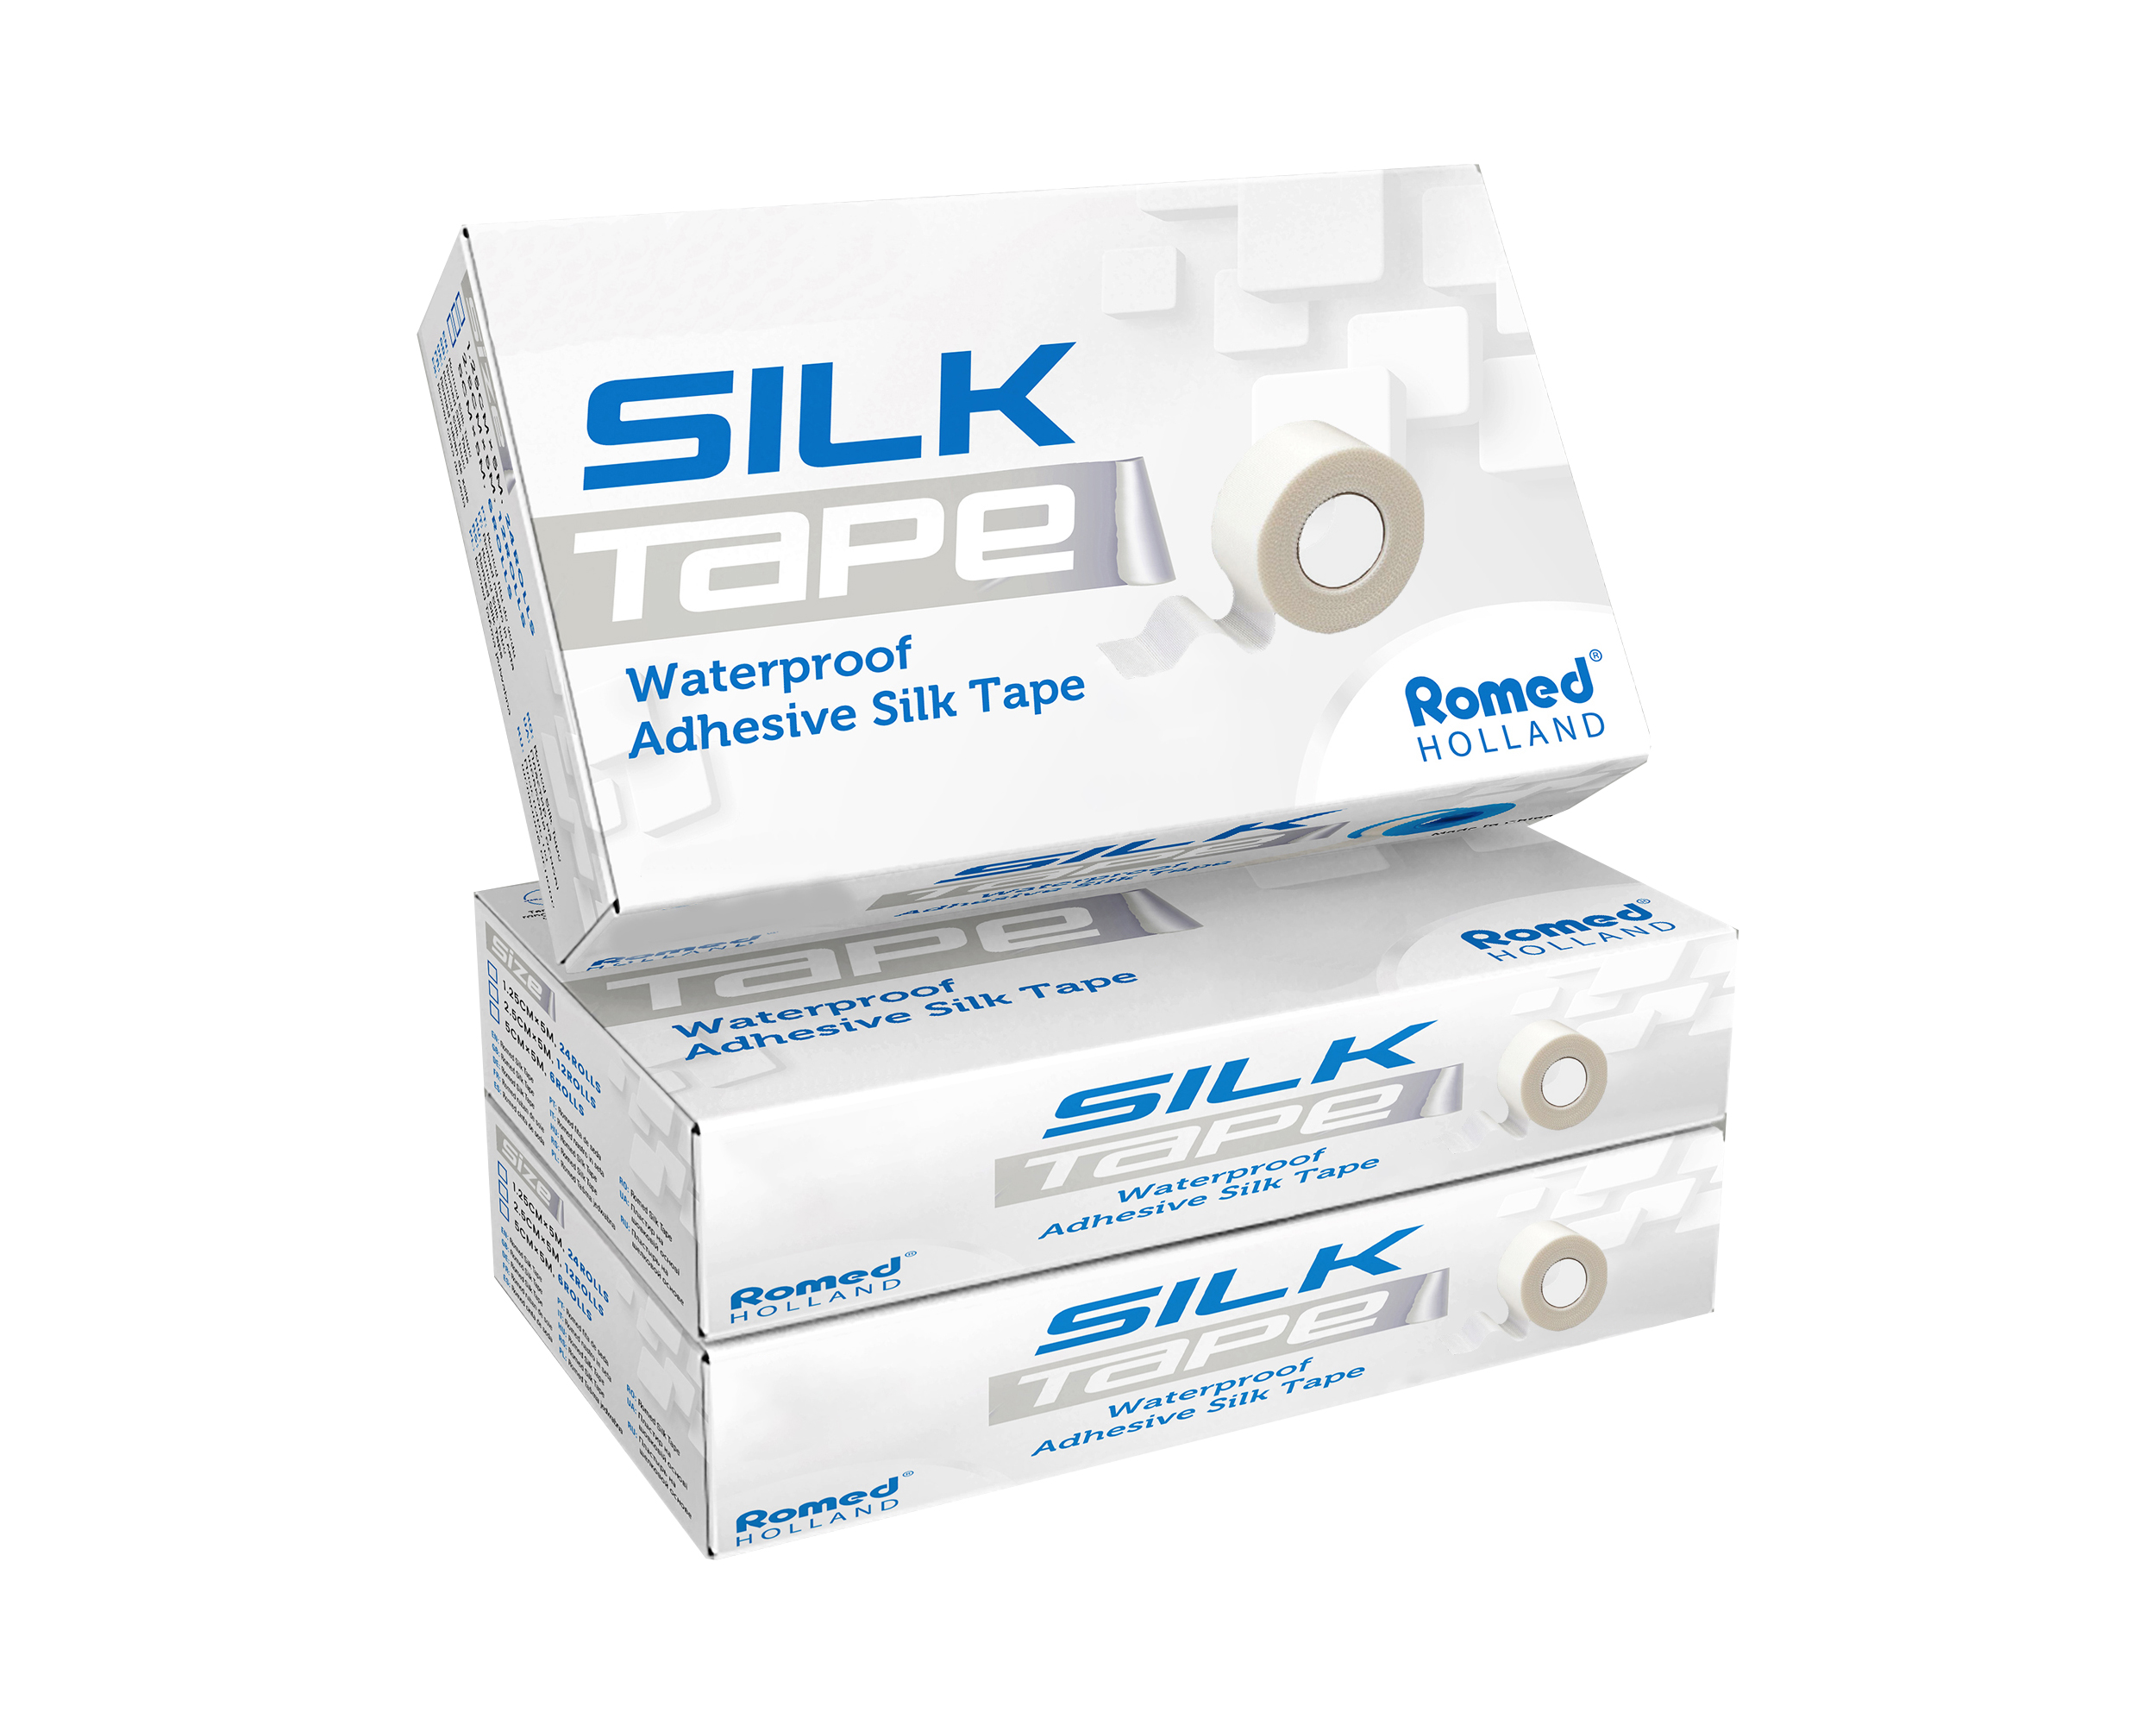 ST-1.25 Romed Adhesive Silk Tape, 1.25cm x 5m, soft easy-tear, waterproof, 24 rolls in an innerbox, 180 rolls per carton.